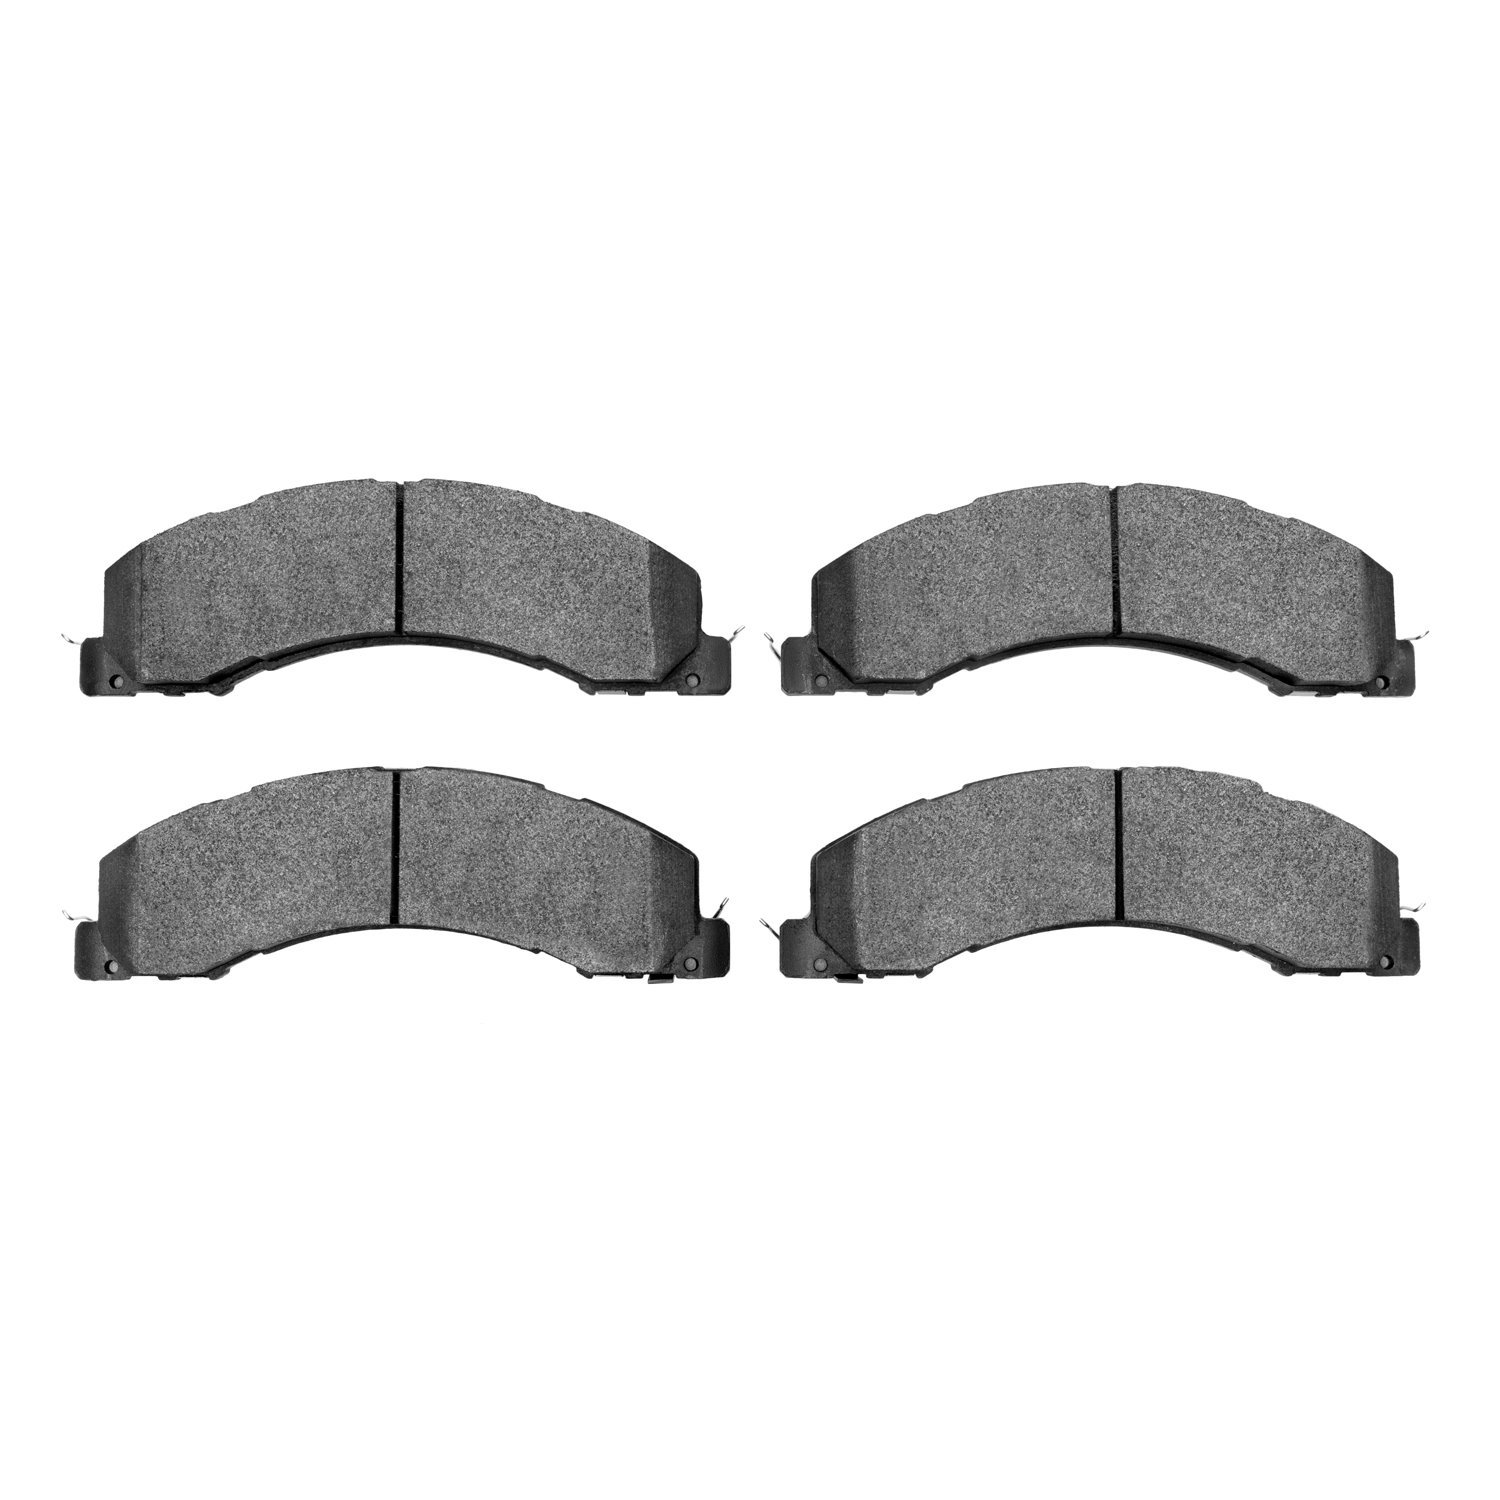 Semi-Metallic Brake Pads, 2008-2021 Fits Multiple Makes/Models, Position: Front & Rear